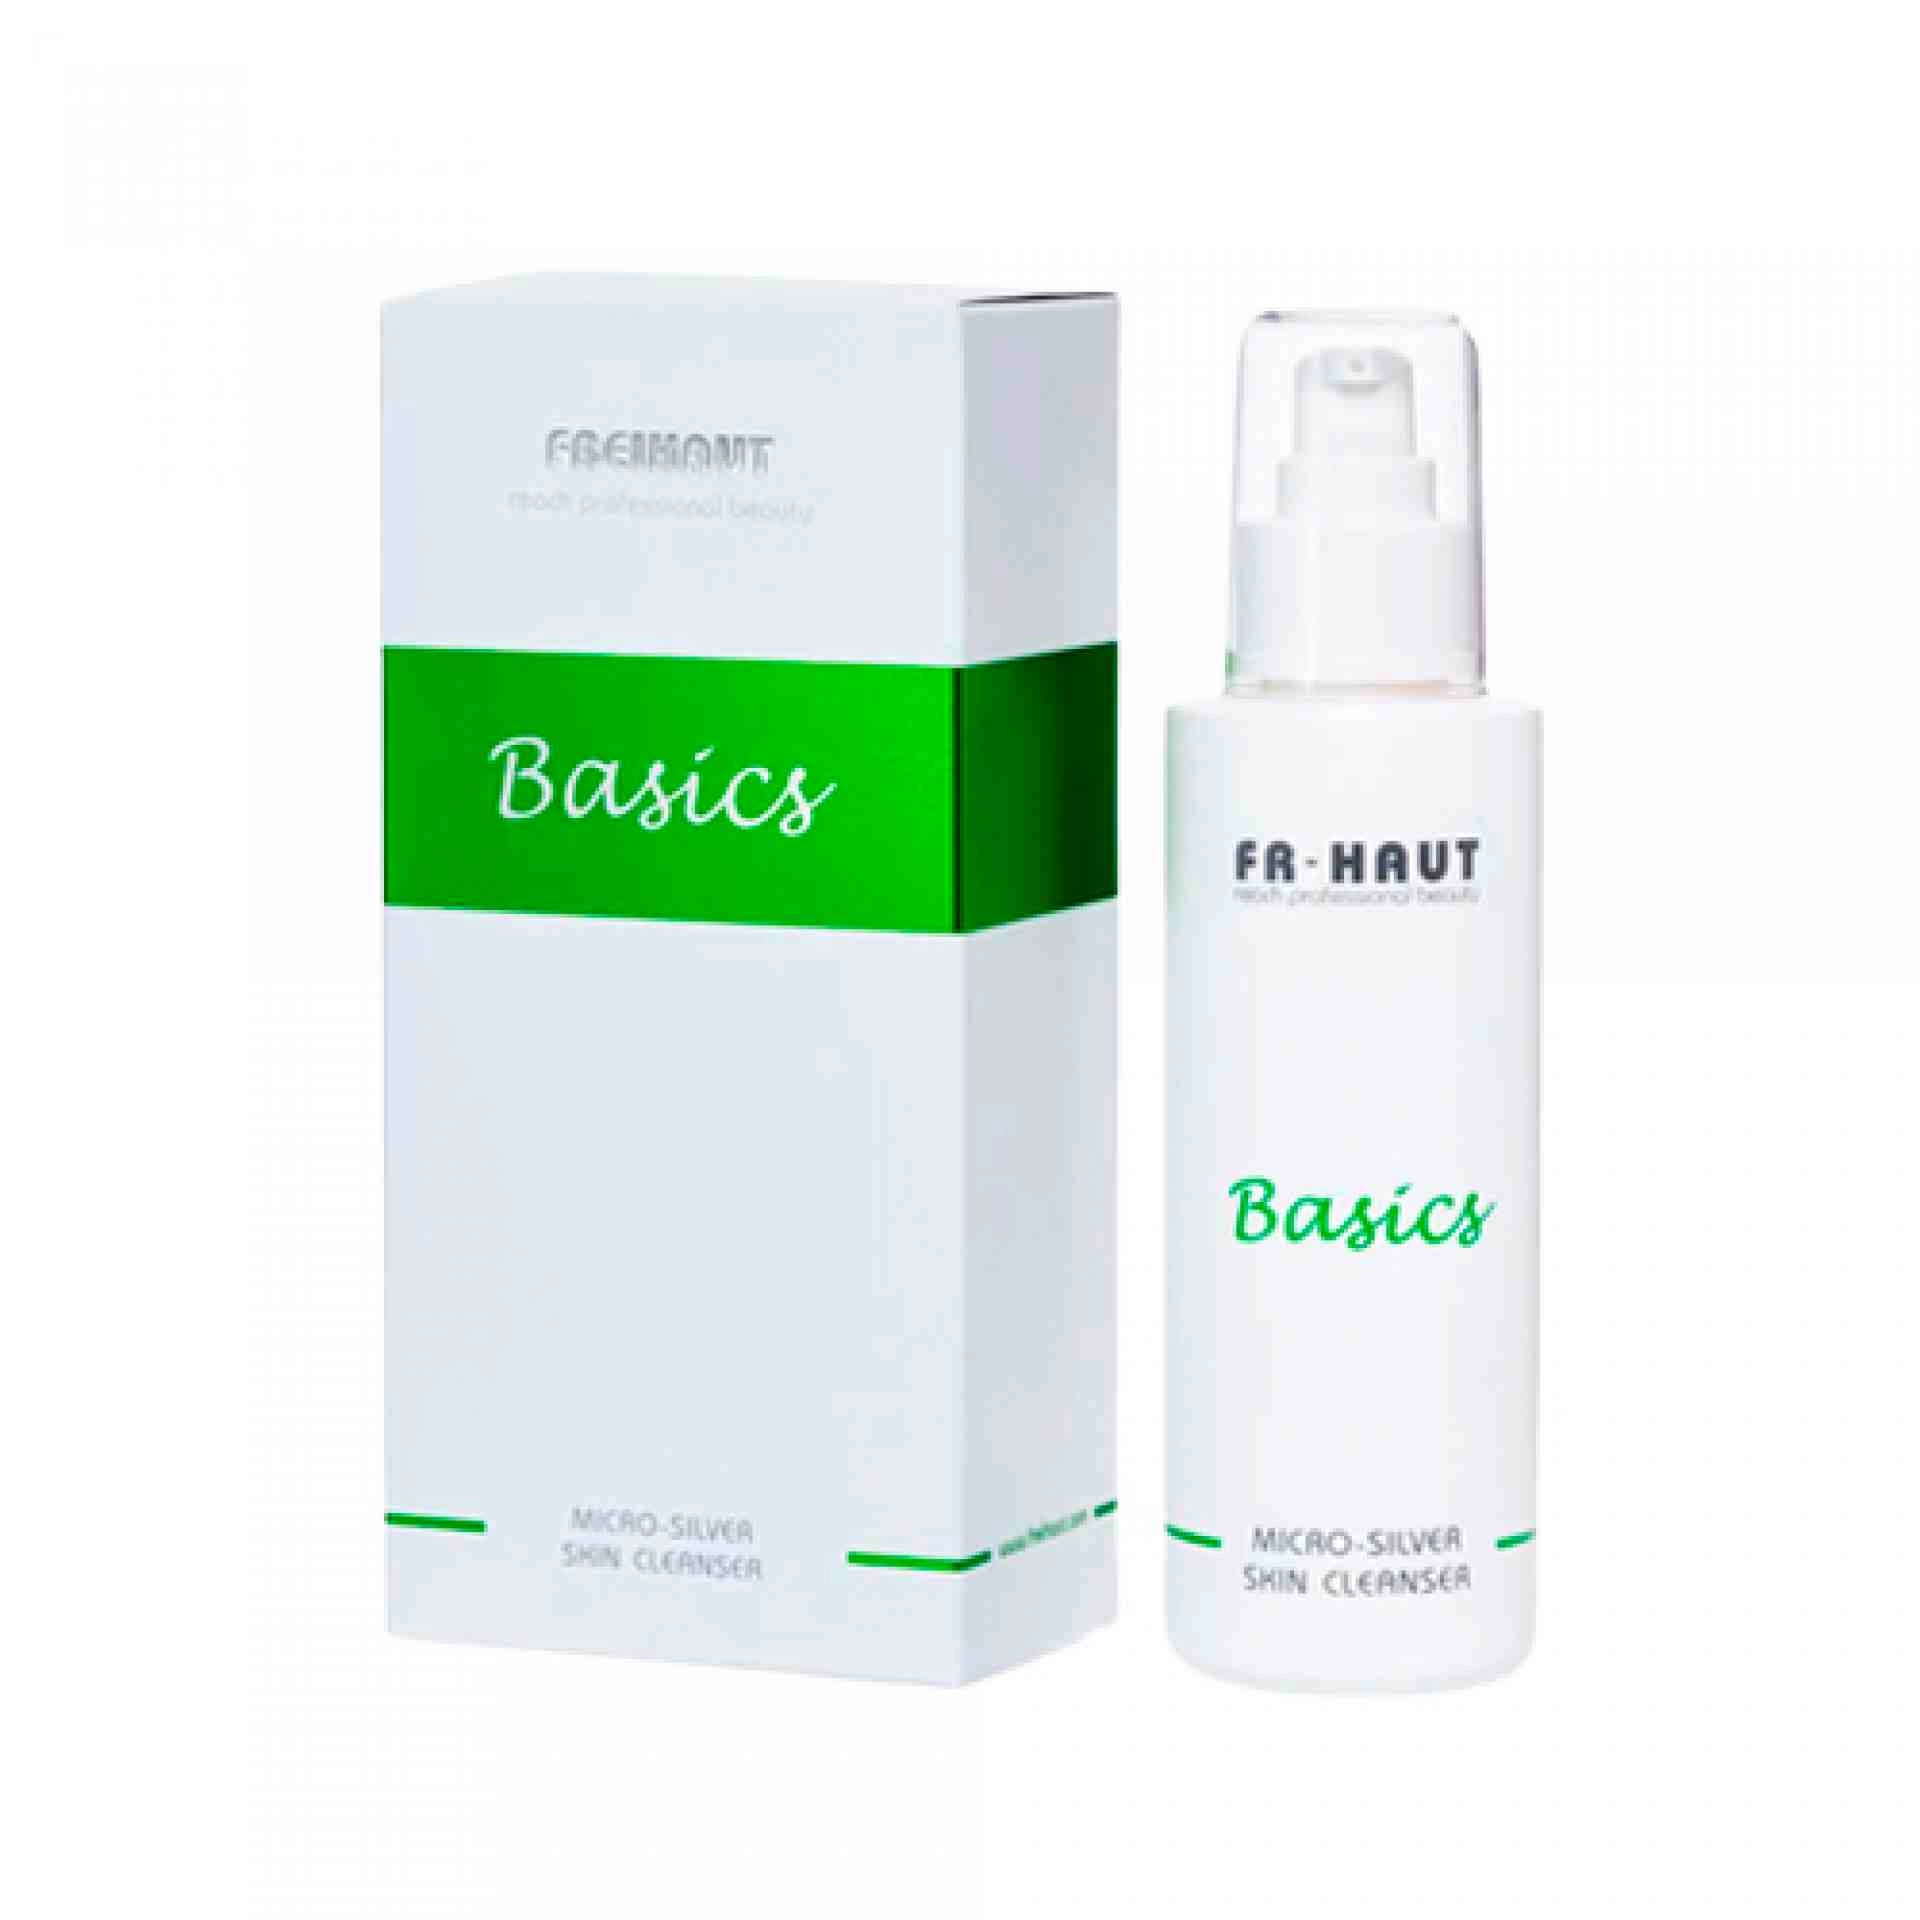 Basics Micro-Silver Skin Cleanser | Mousse Limpiador 200ml - Basics - Freihaut ®